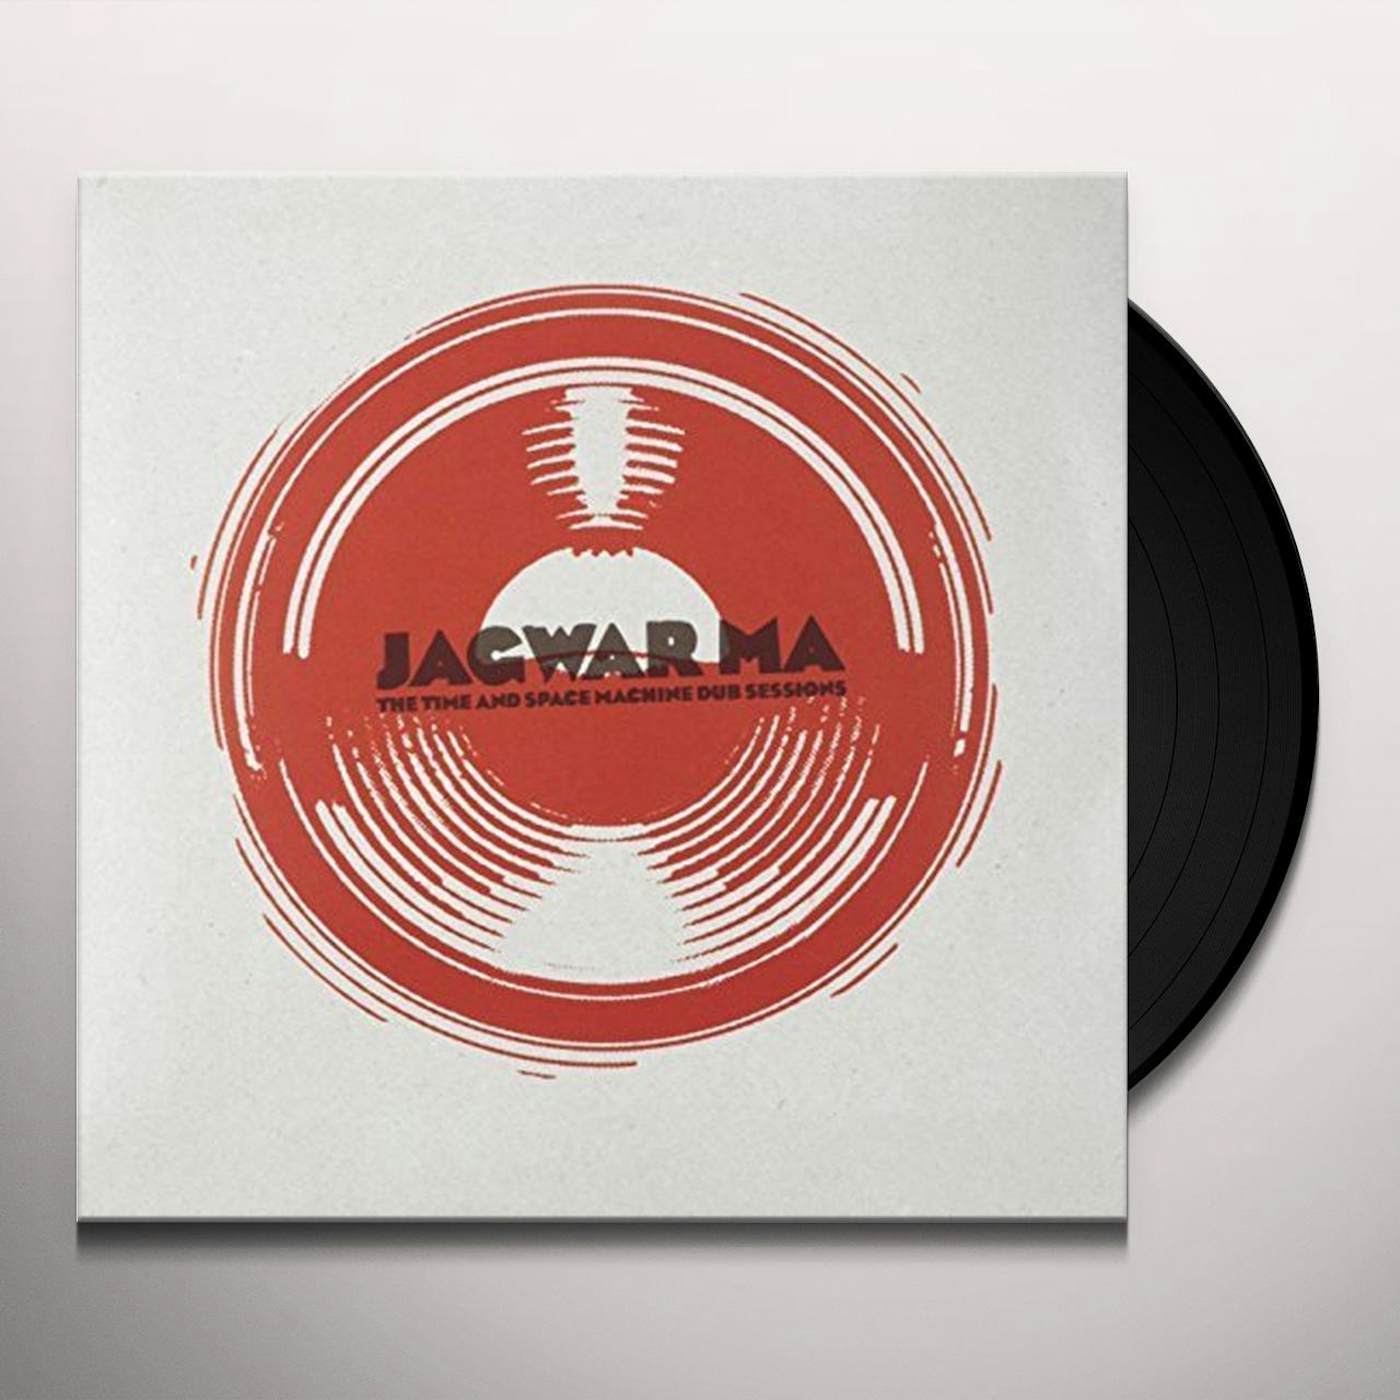 Jagwar Ma TIME & SPACE MACHINE DUB Vinyl Record